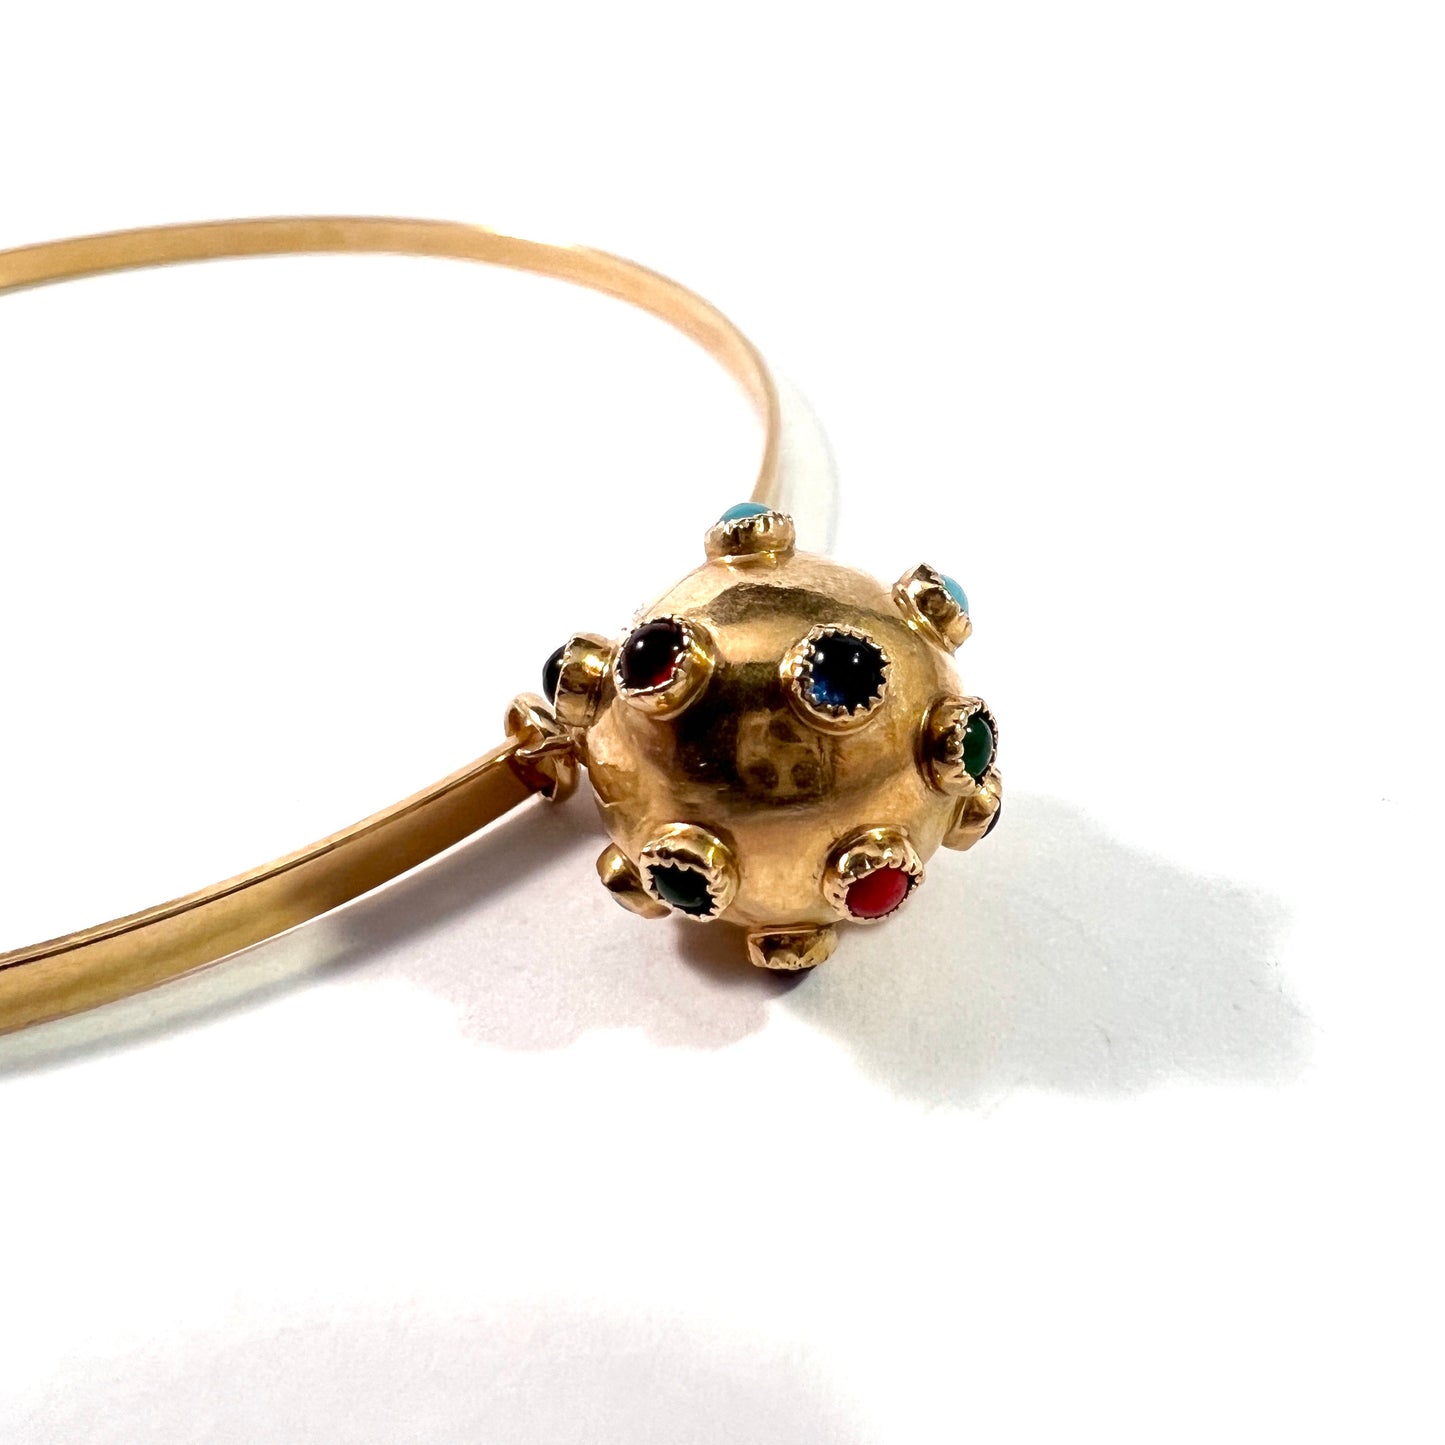 UNO A ERRE, Arezzo, Italy 1944-68. Vintage 18k Gold Sputnik Charm Bangle Bracelet.